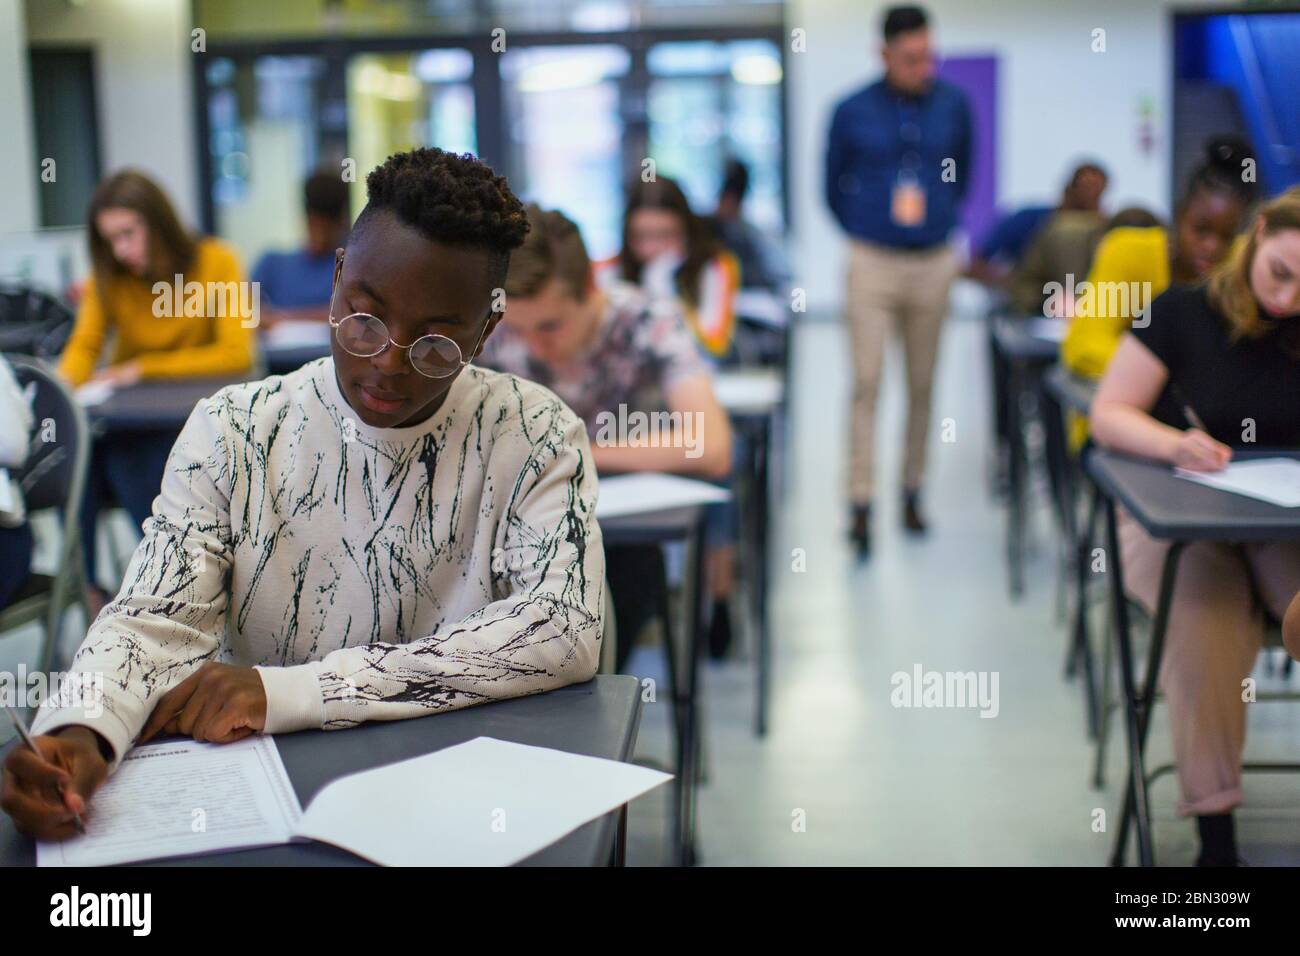 Focused high school boy student taking exam at desk Stock Photo